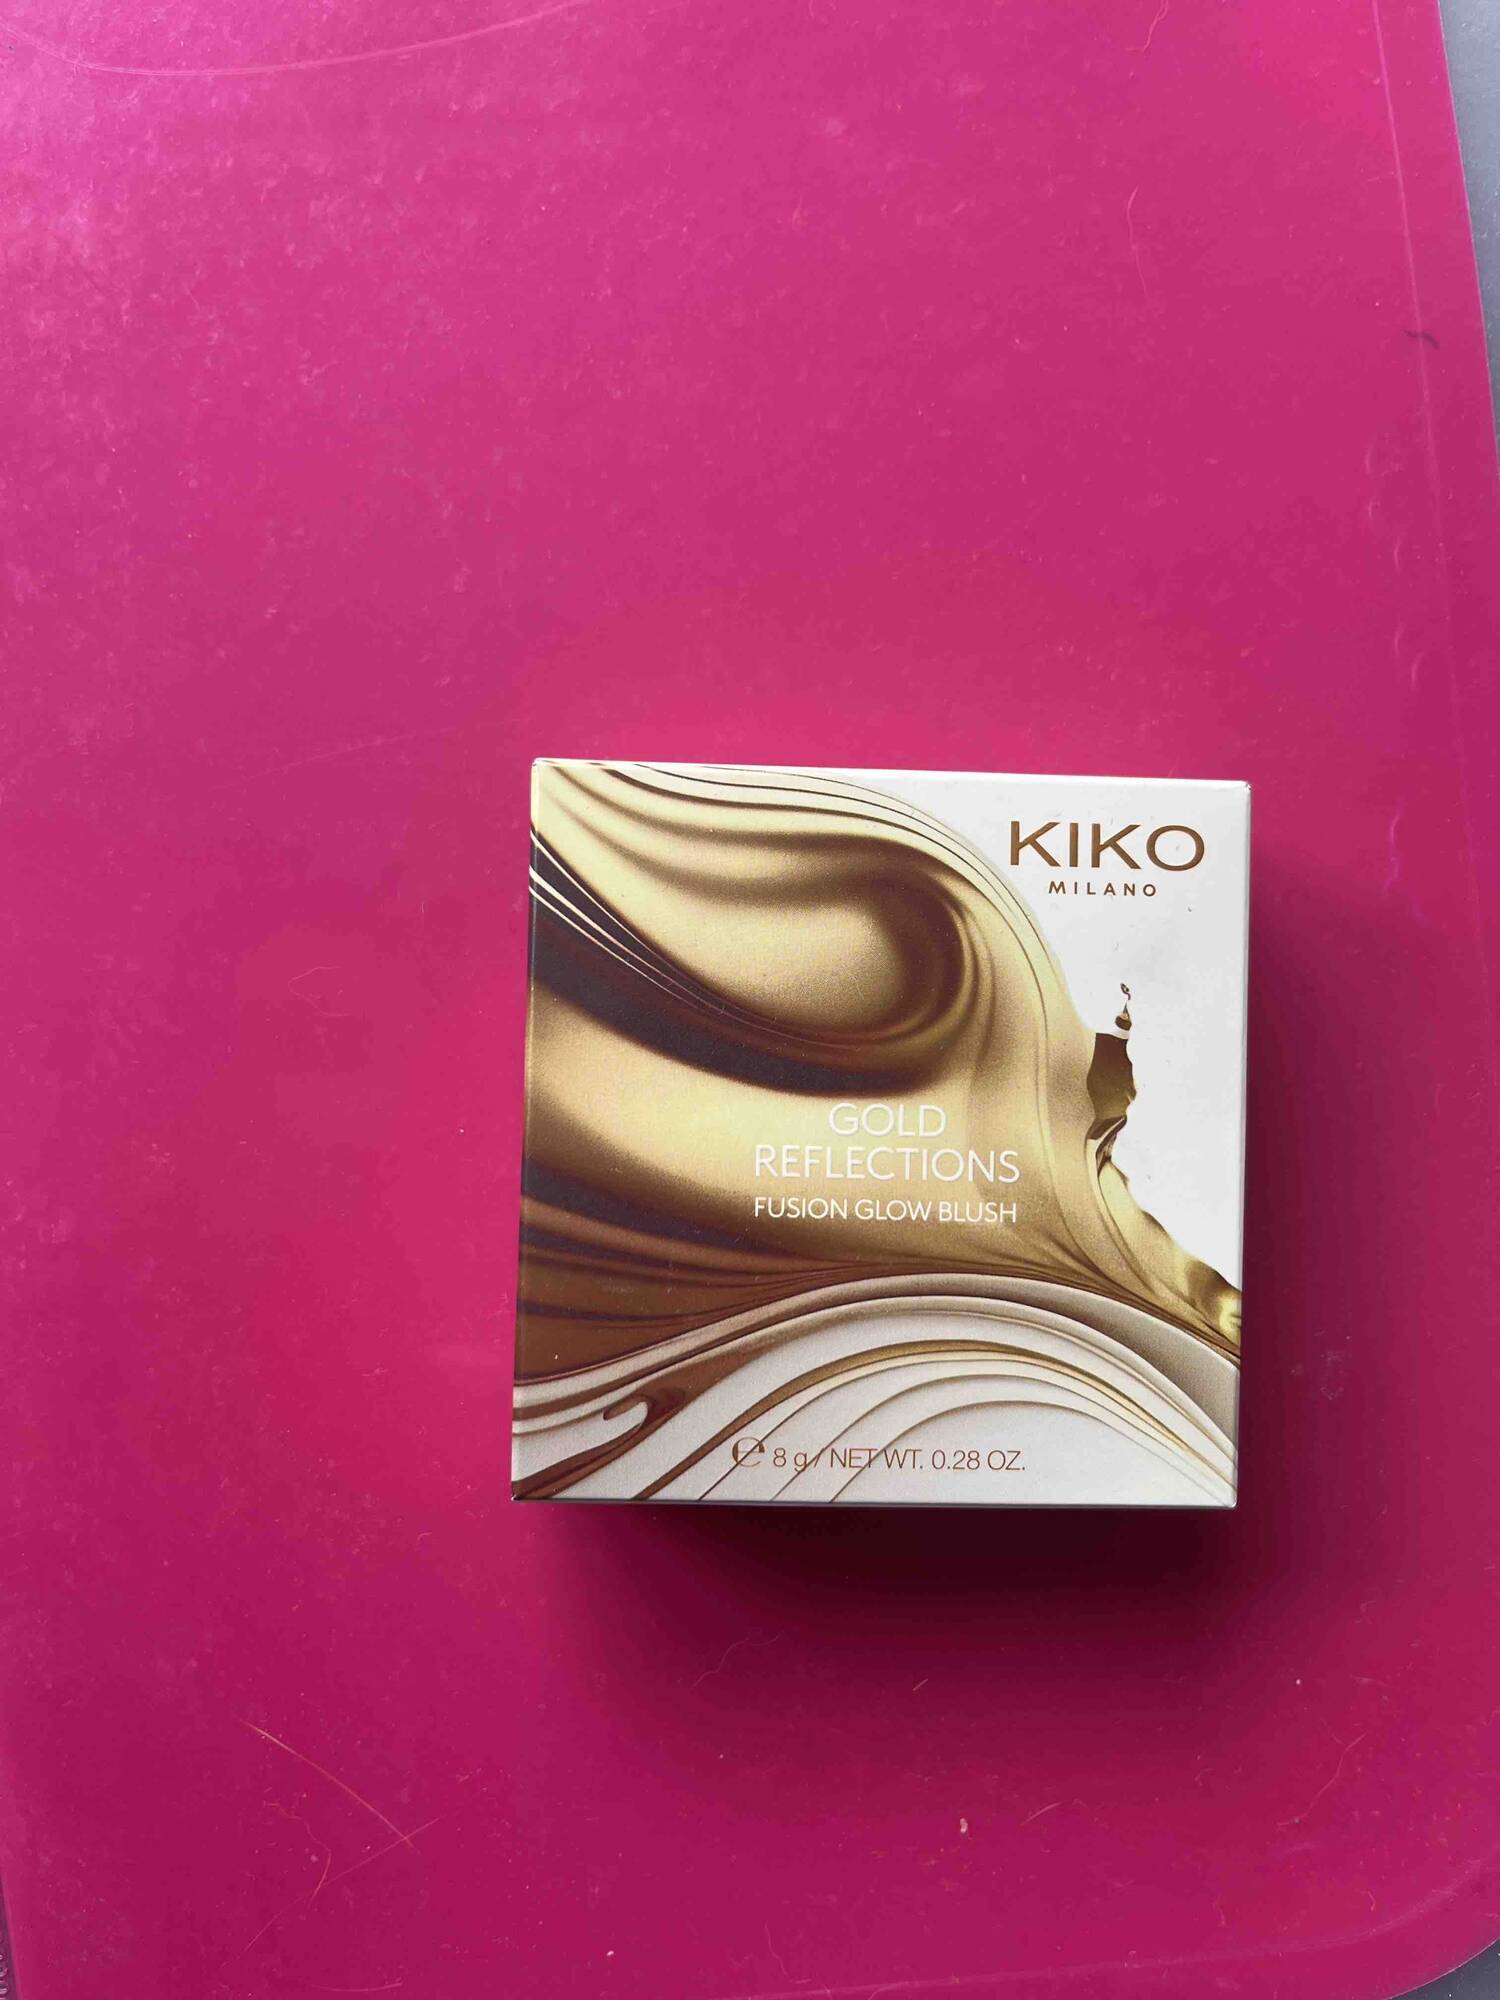 KIKO - Gold reflections - Fusion glow blush